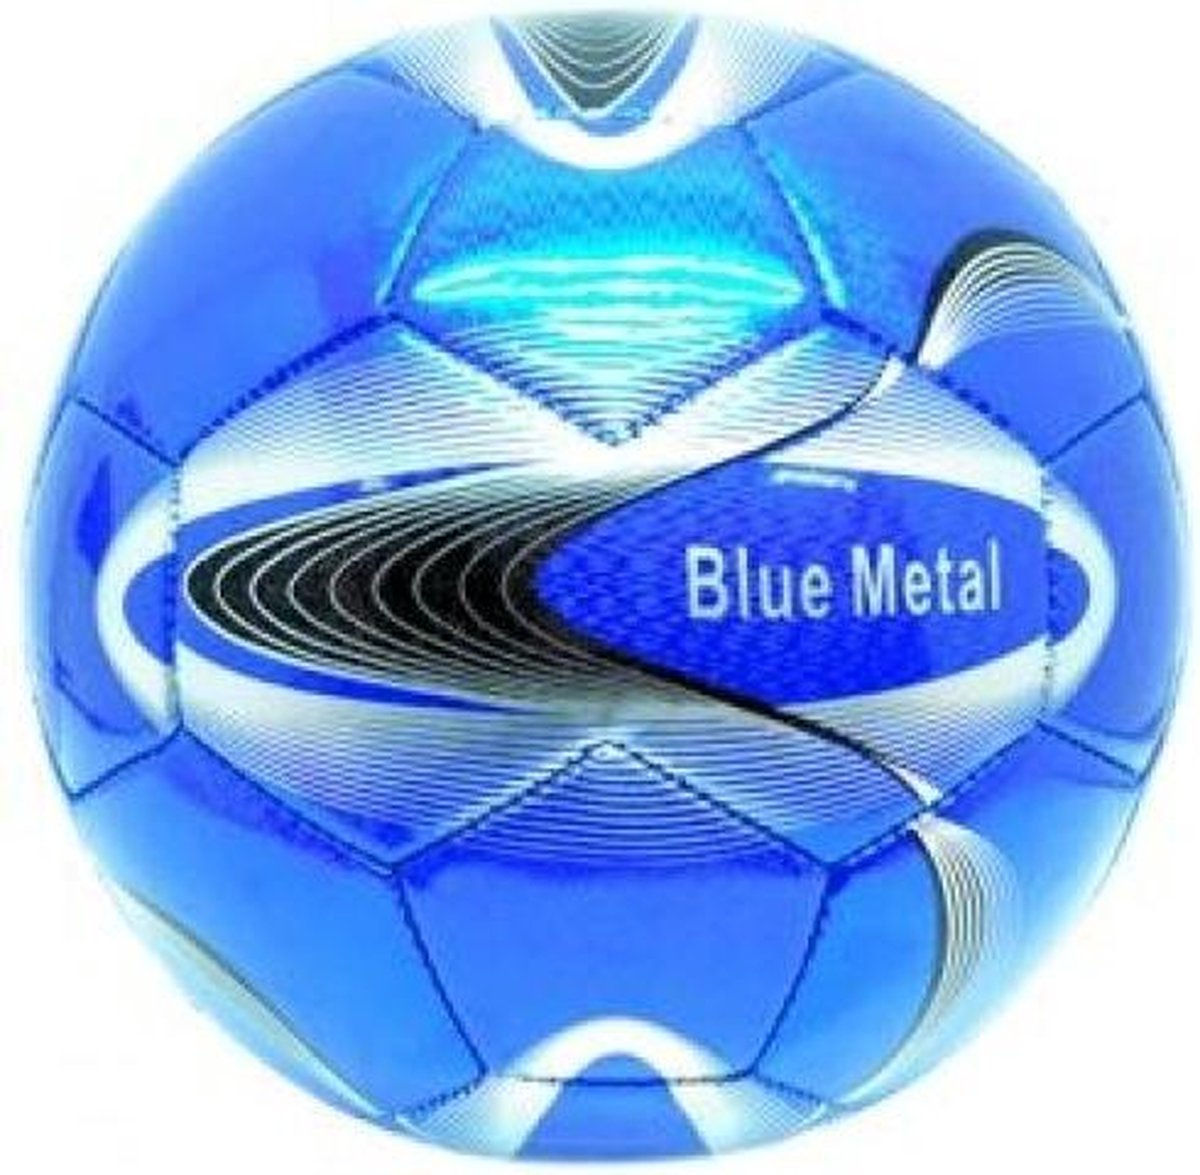 Hot sports Voetbal blue metal blauw maat 5